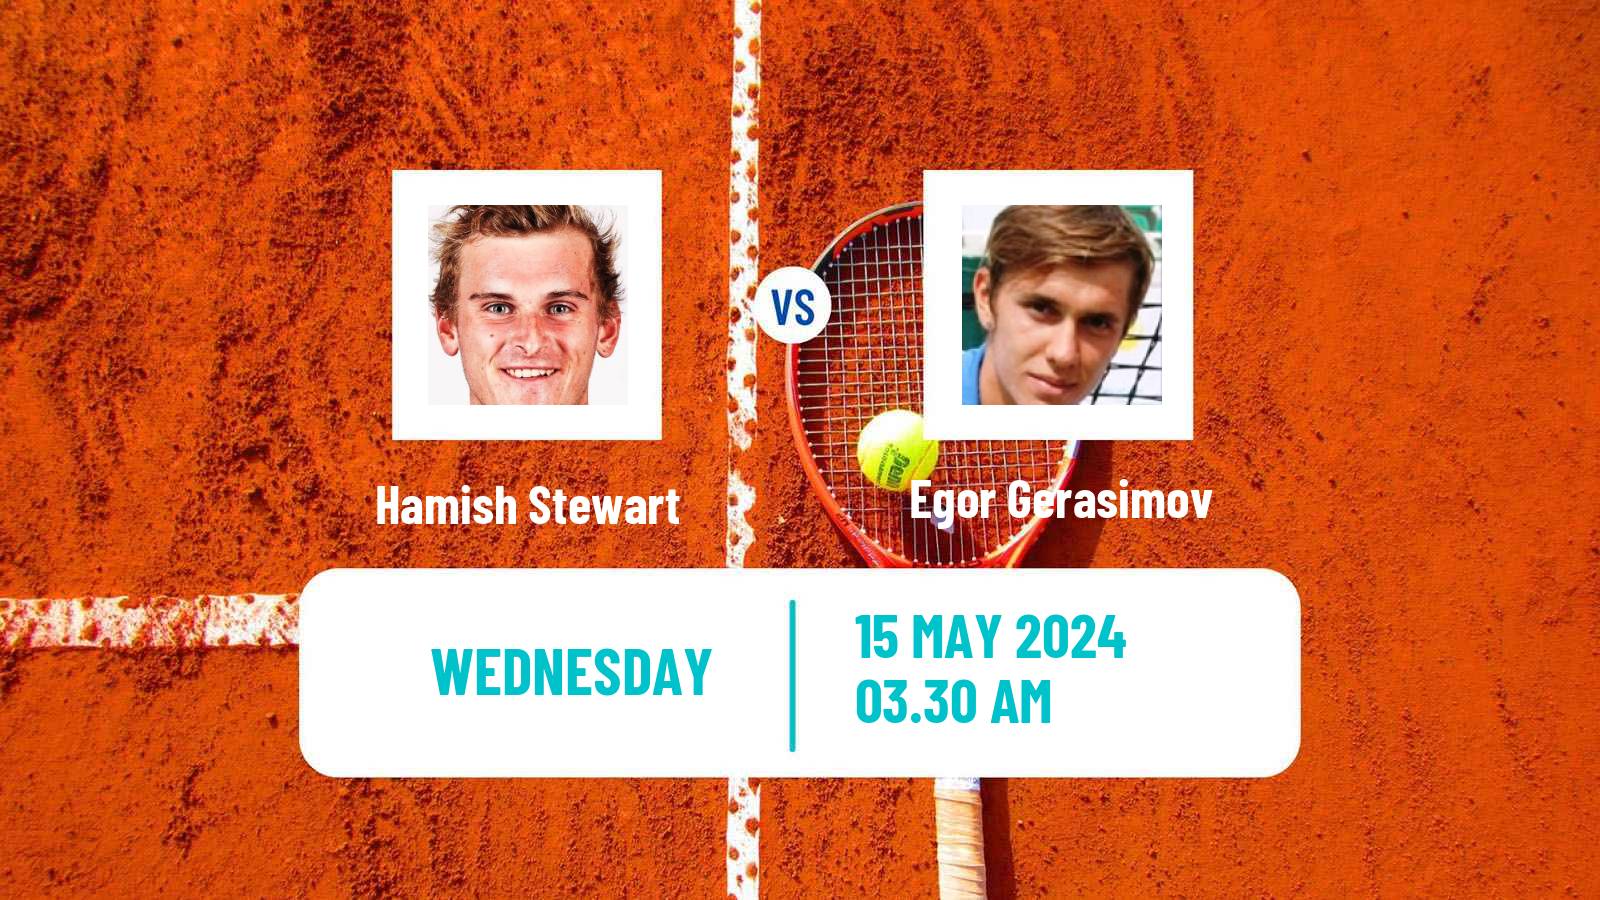 Tennis ITF M25 Kachreti Men Hamish Stewart - Egor Gerasimov